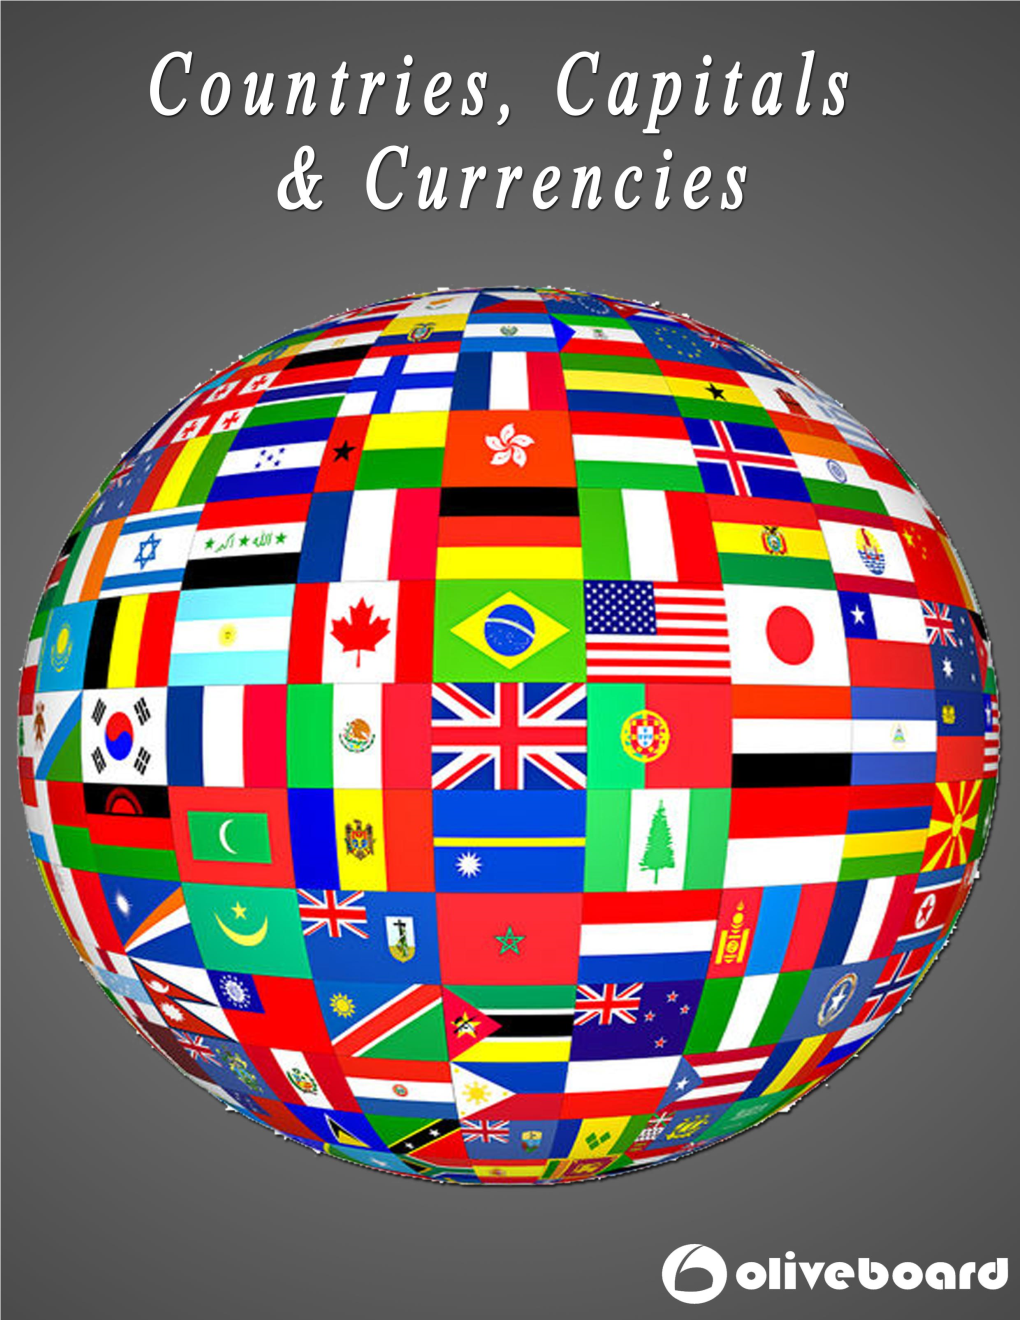 Countries, Capitals & Currencies